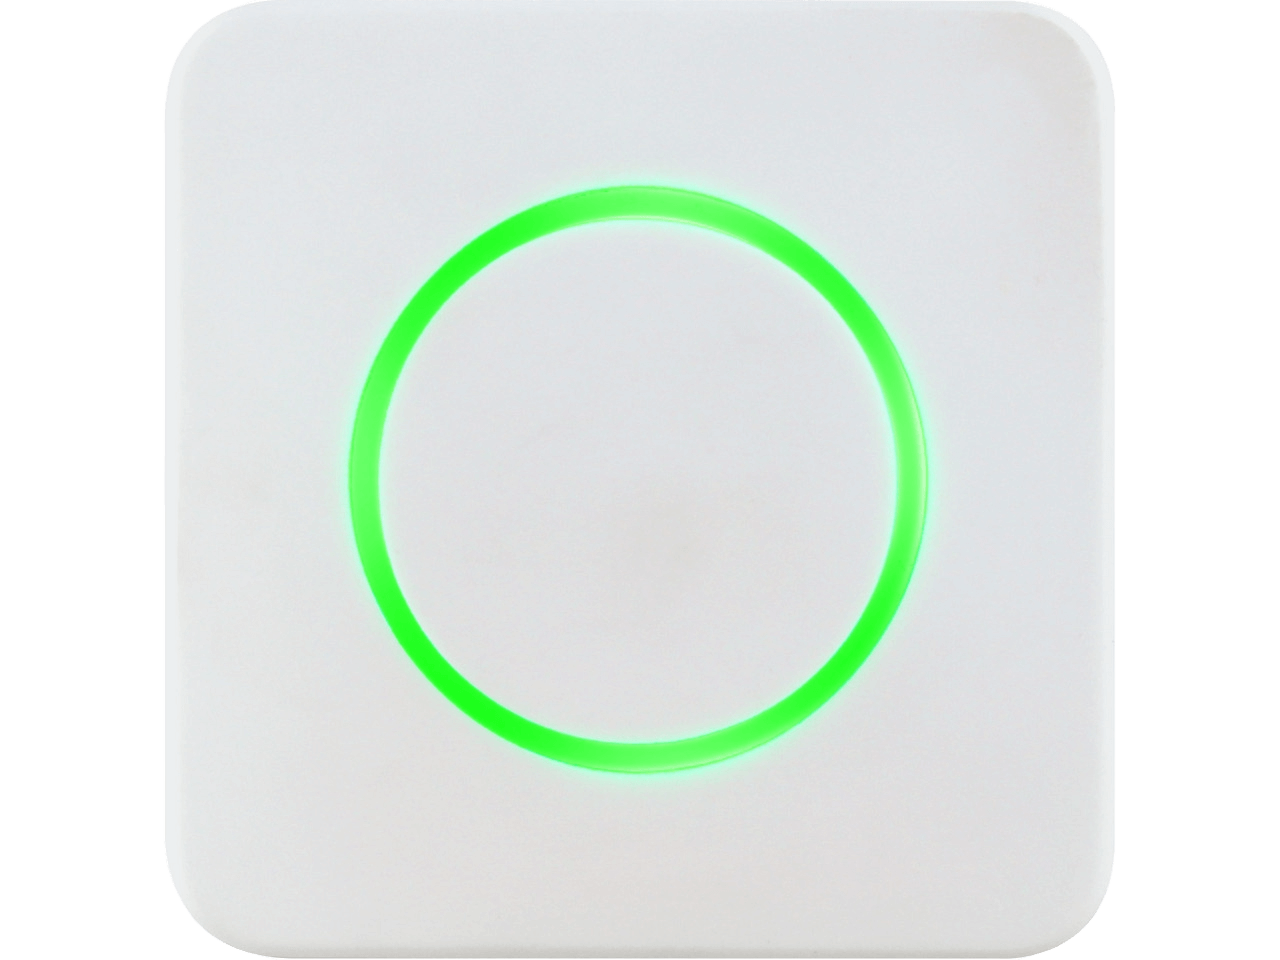 Bircher CleanSwitch Hands-Free Radar Push-Button white blank space